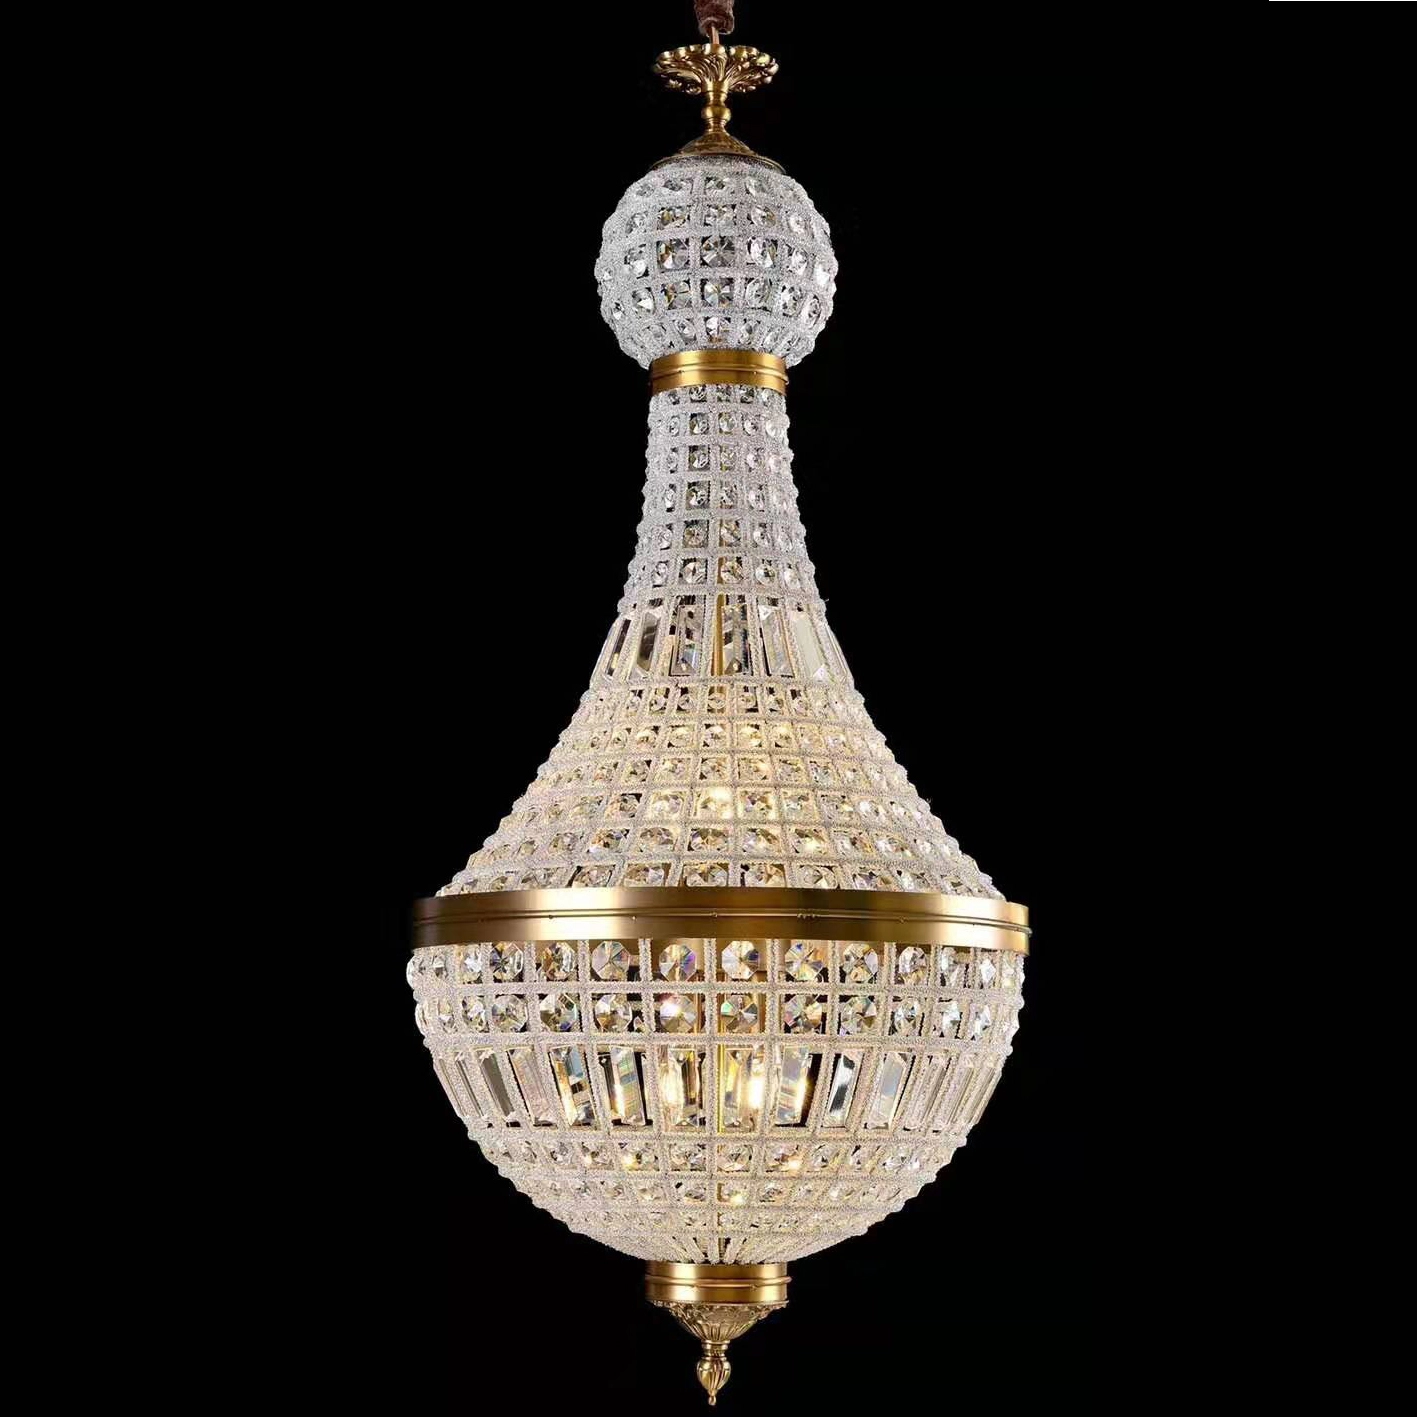 Big size empire crystal chandelirer lantern style